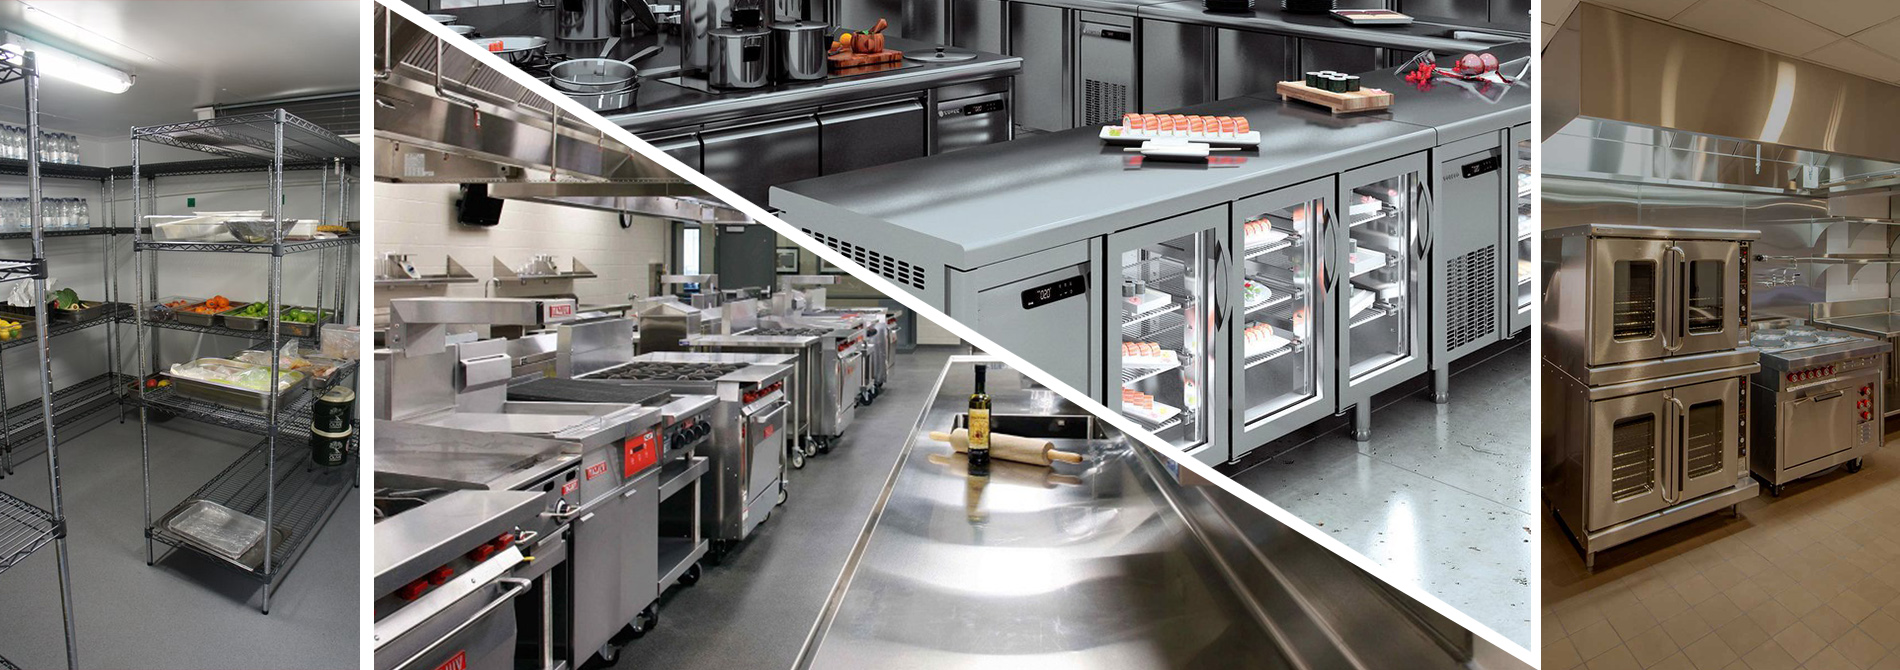 Commercial kitchen equipment supplier in dubai UAE